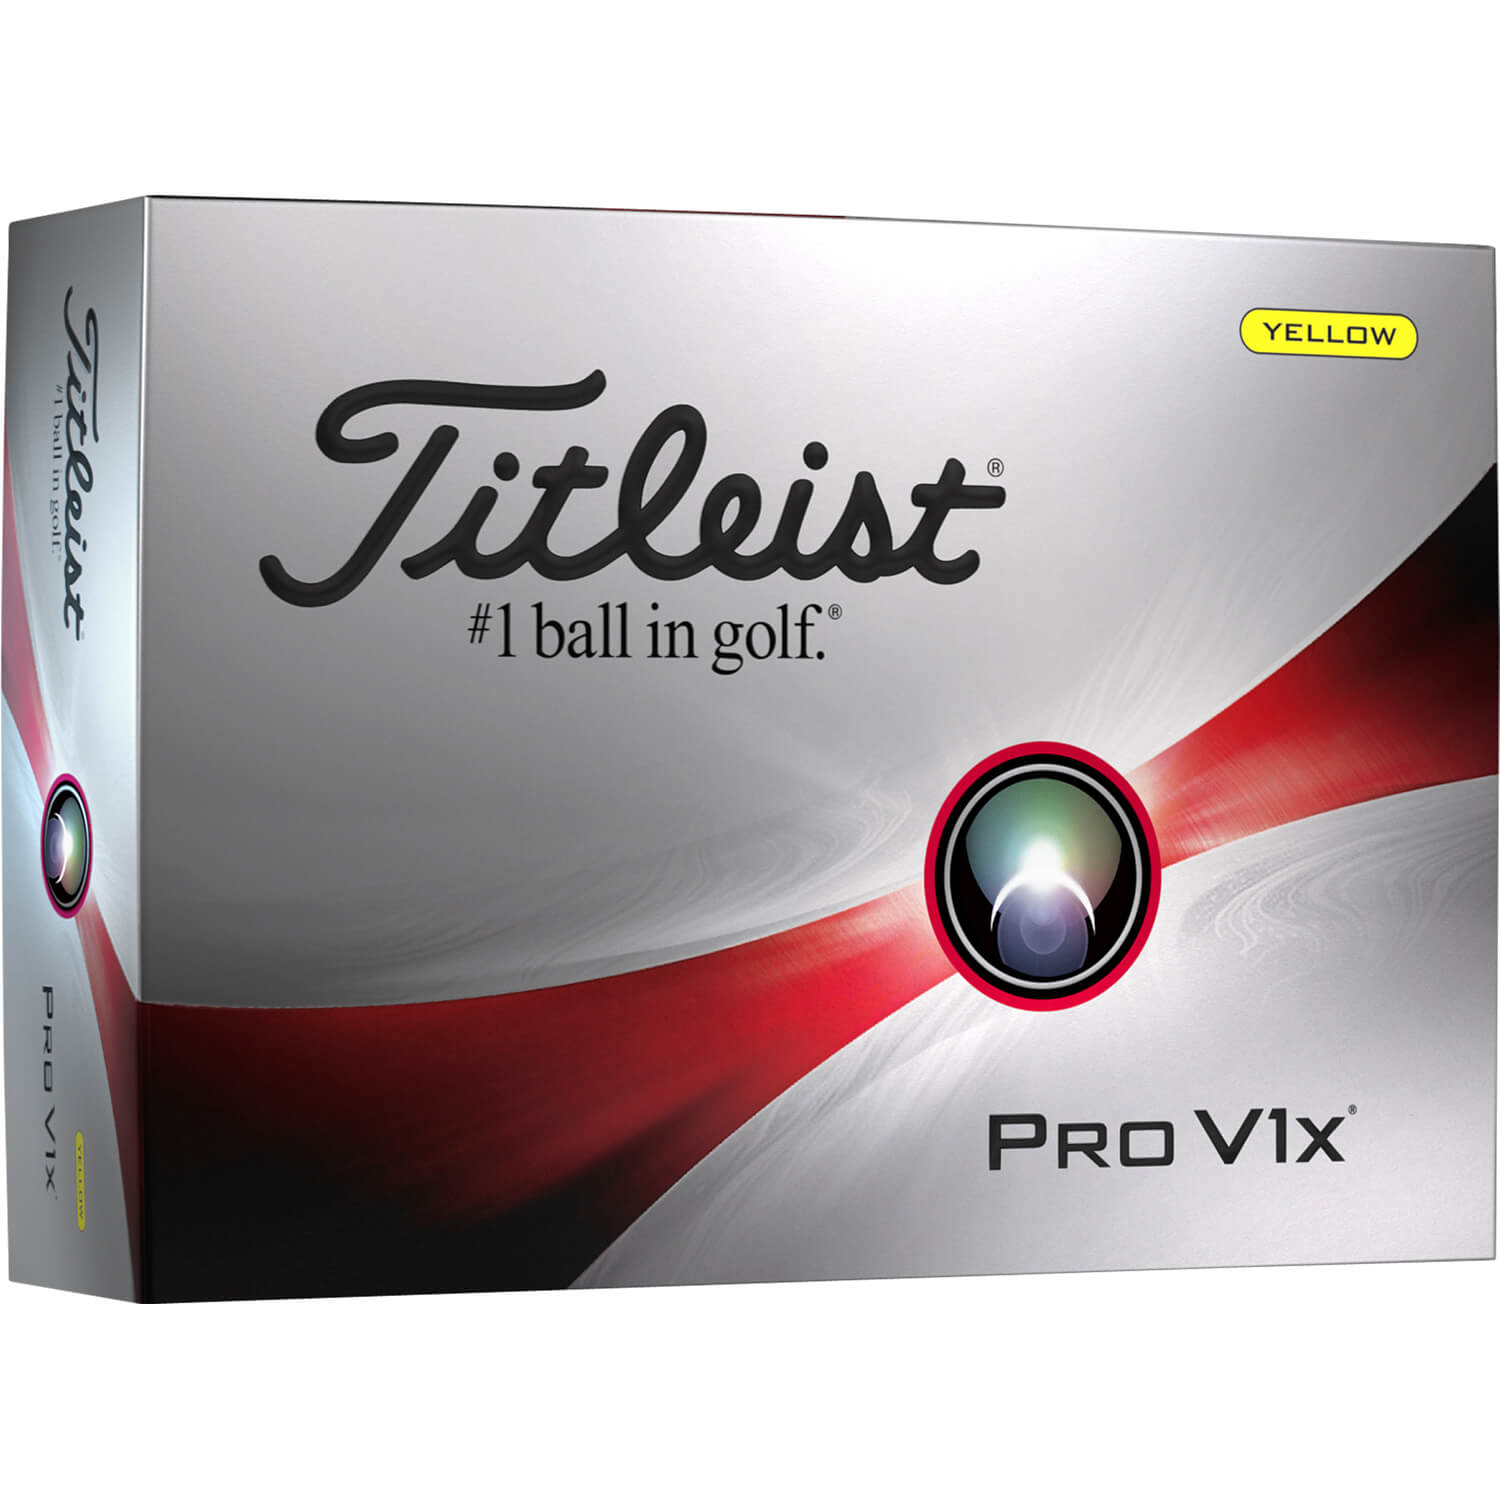 Titleist Pro V1x - yellow (23)